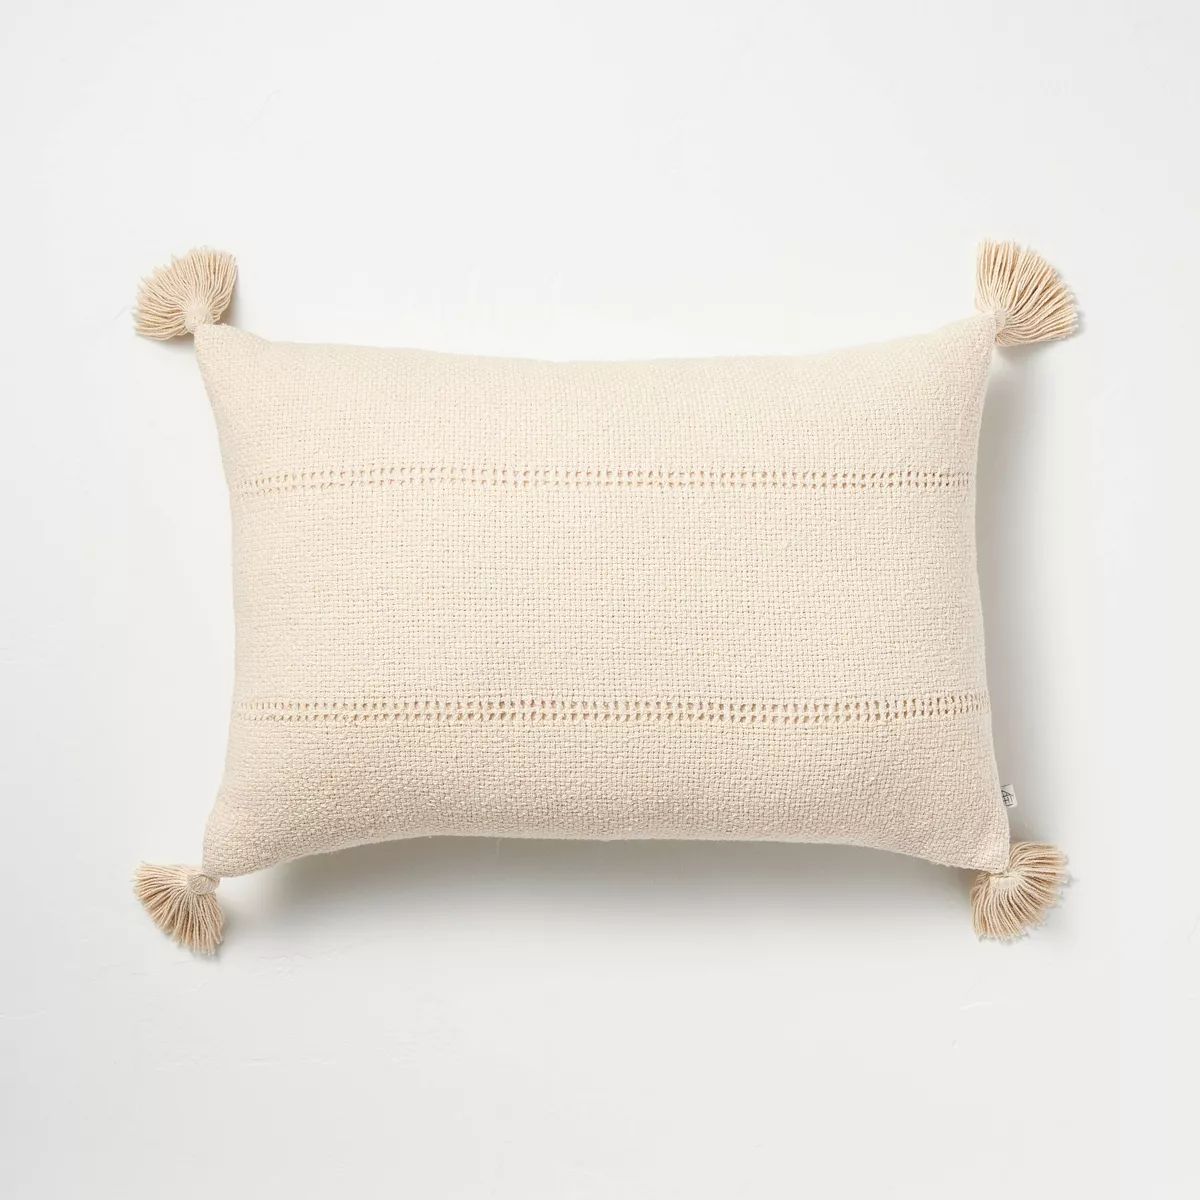 14"x20" Hem Stitch Stripe Lumbar Throw Pillow with Tassels Tan - Hearth & Hand™ with Magnolia | Target